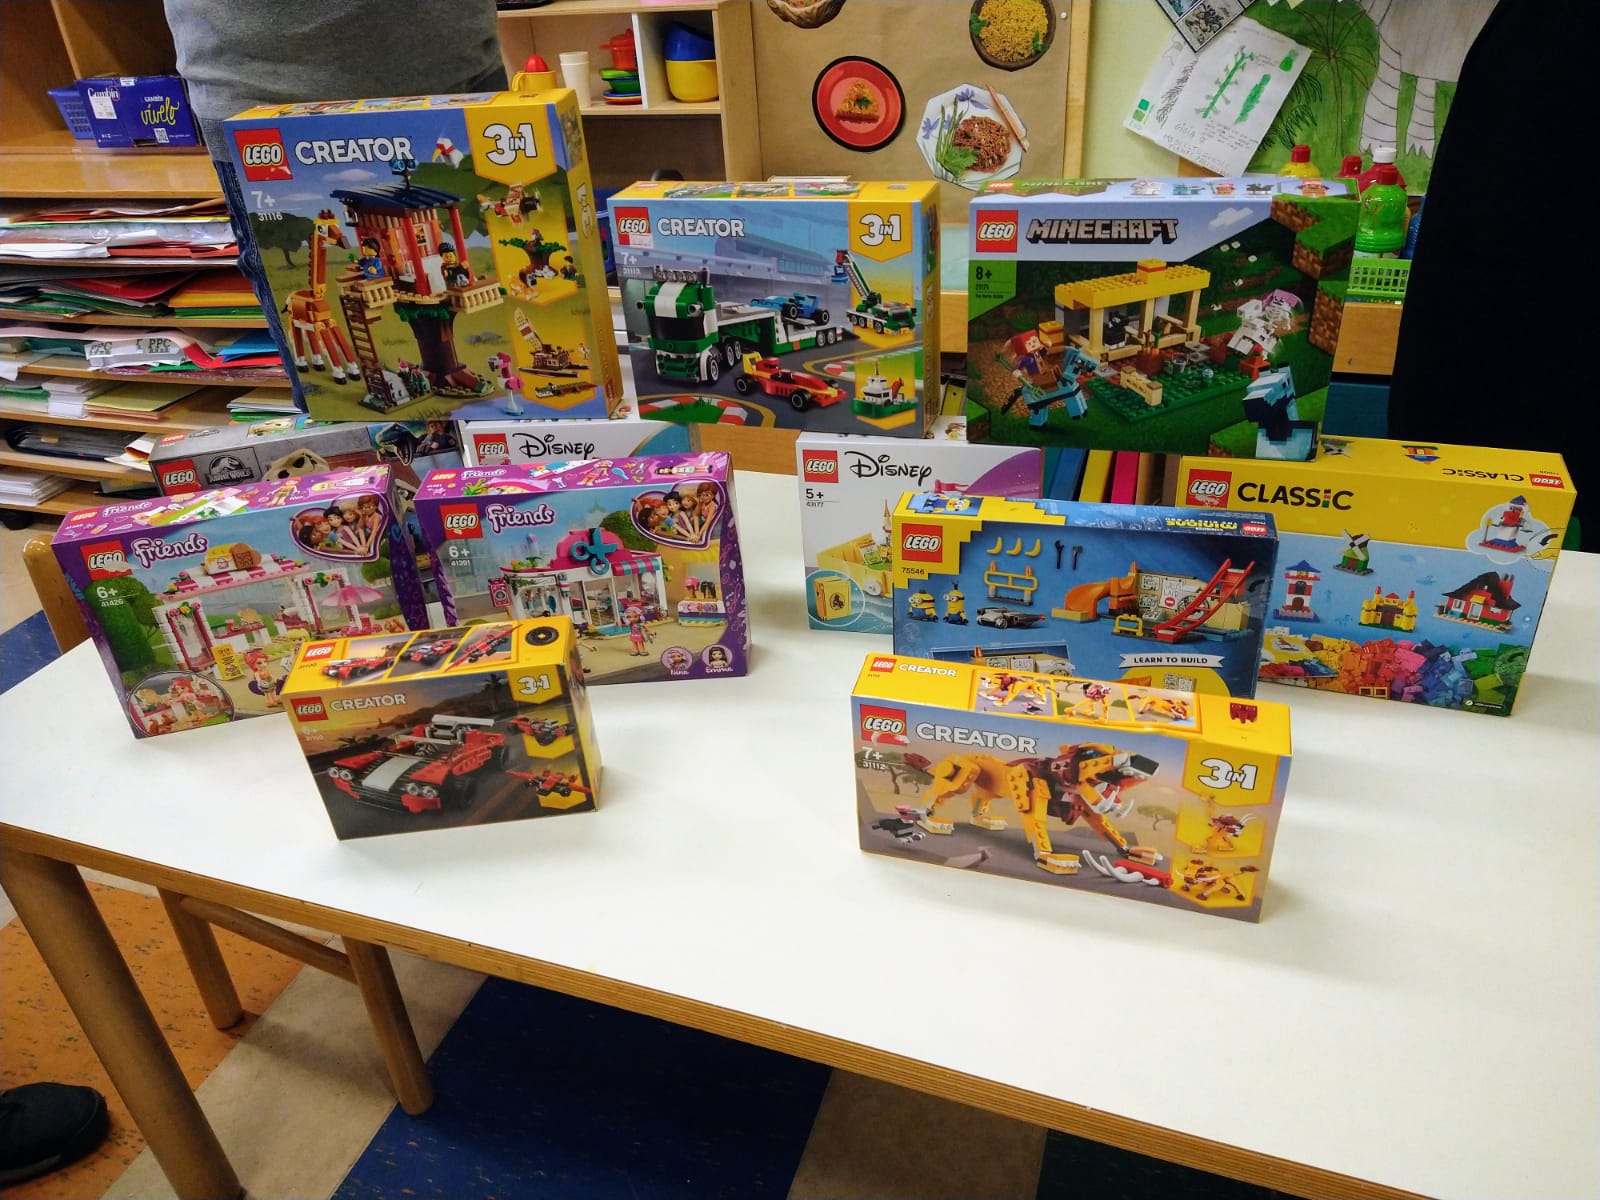  Set Lego per i bambini ricoverati al Policlinico